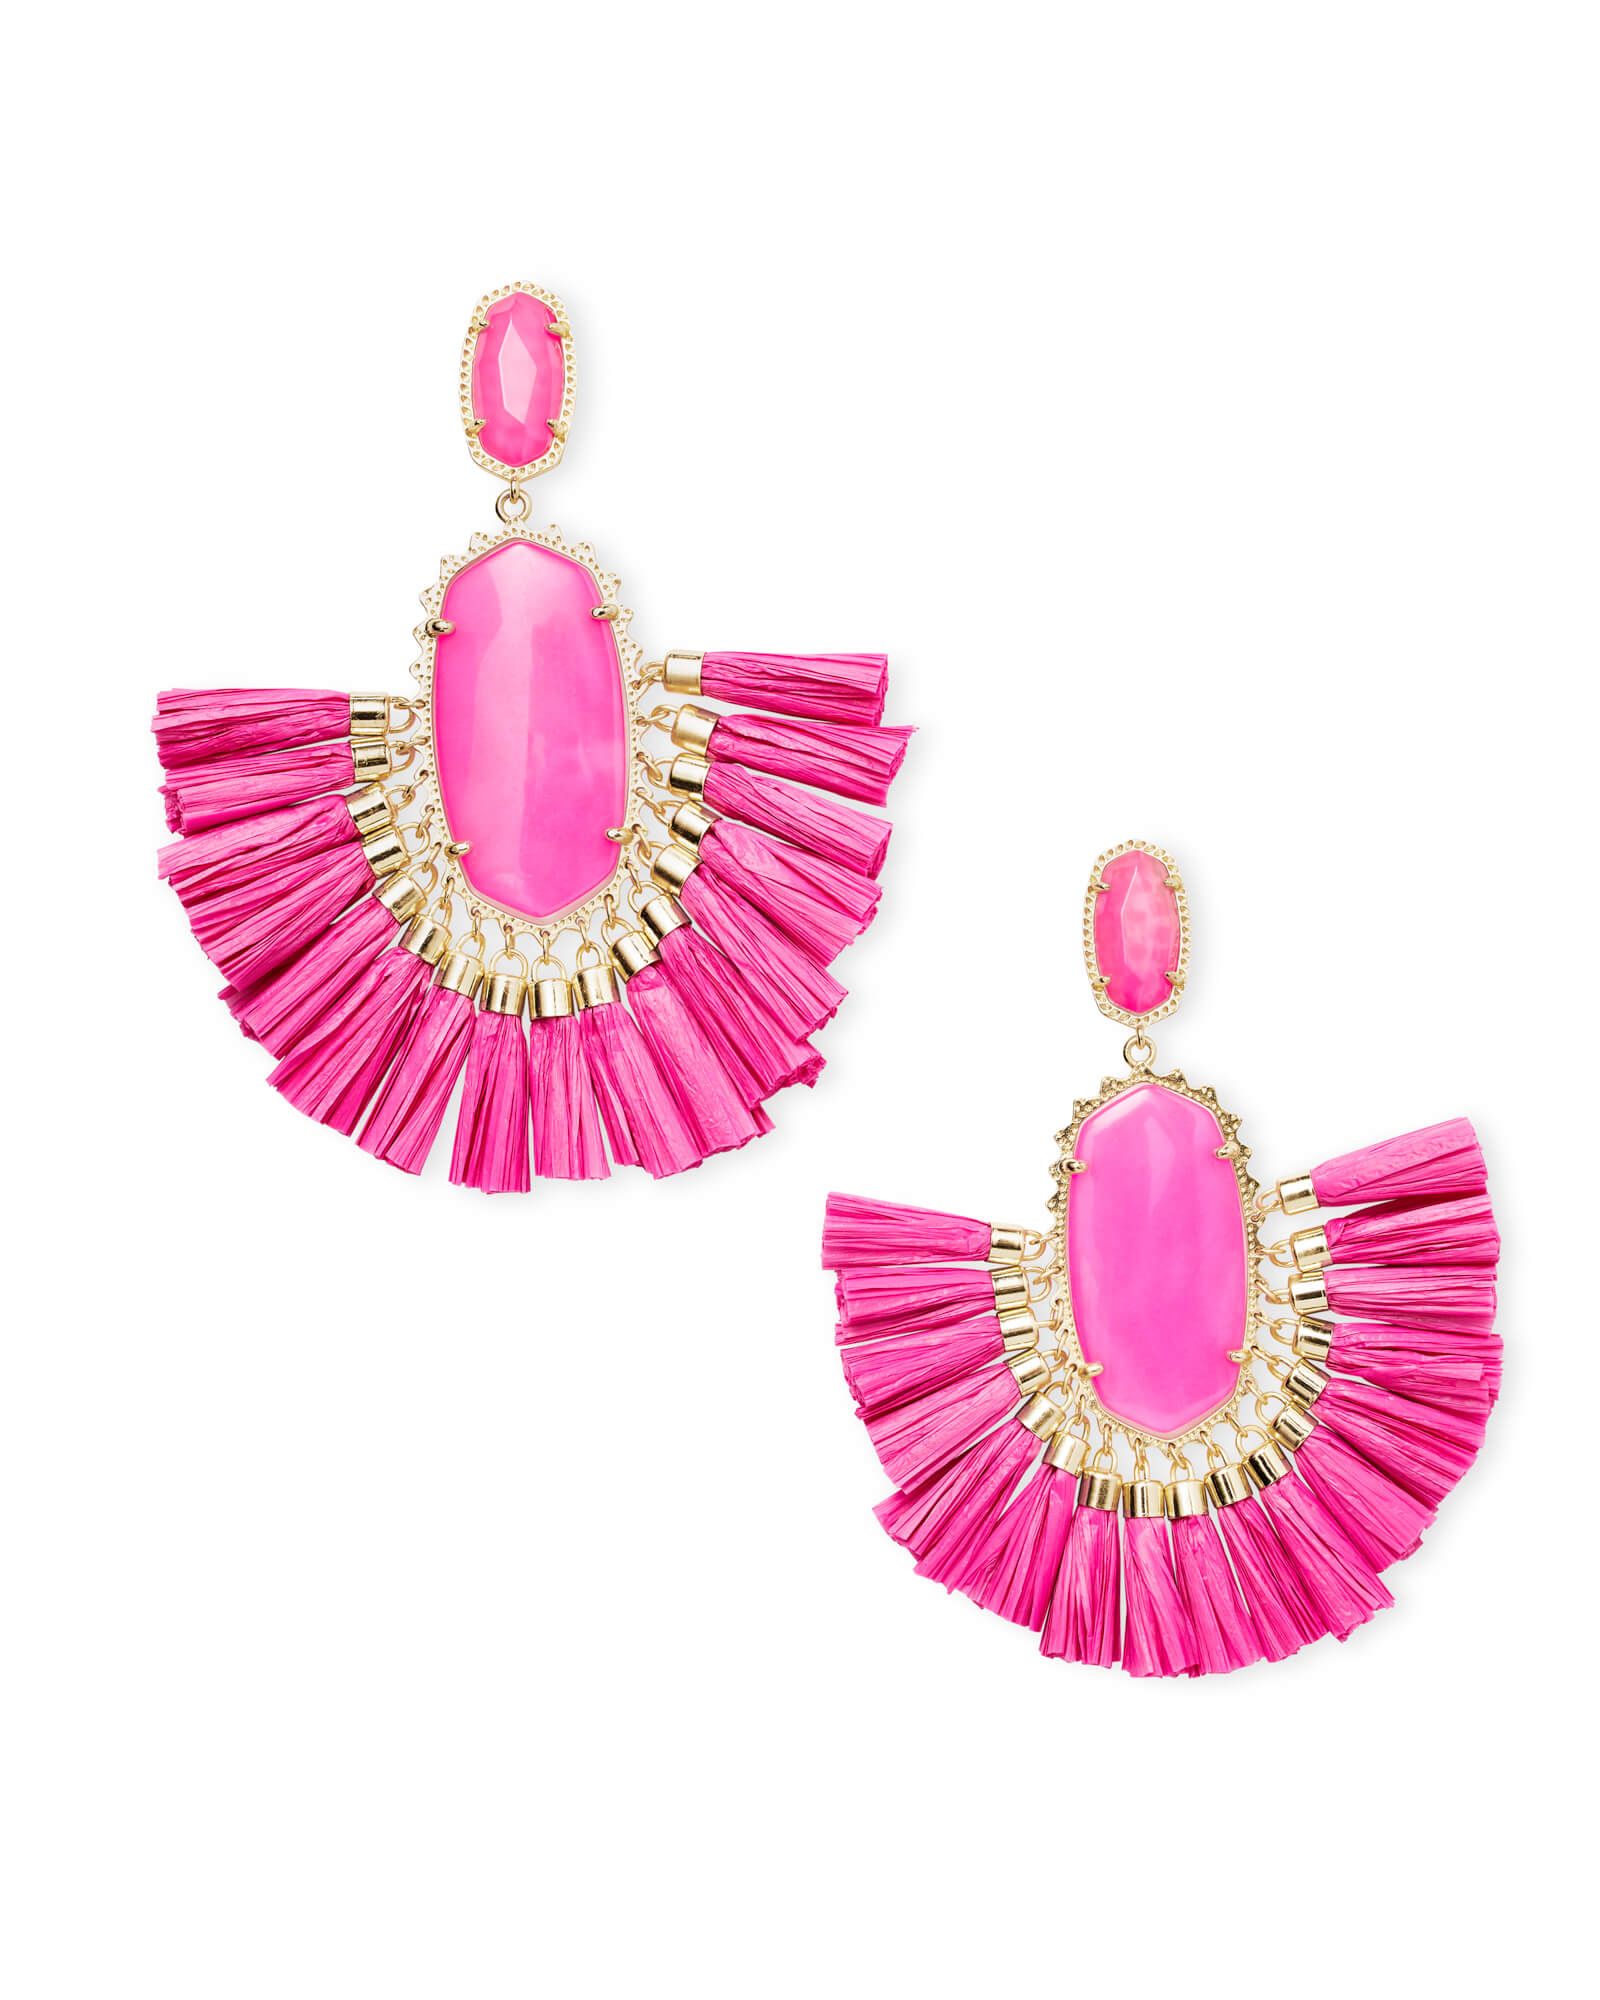 Cristina Gold Statement Earrings In Pink Agate | Kendra Scott